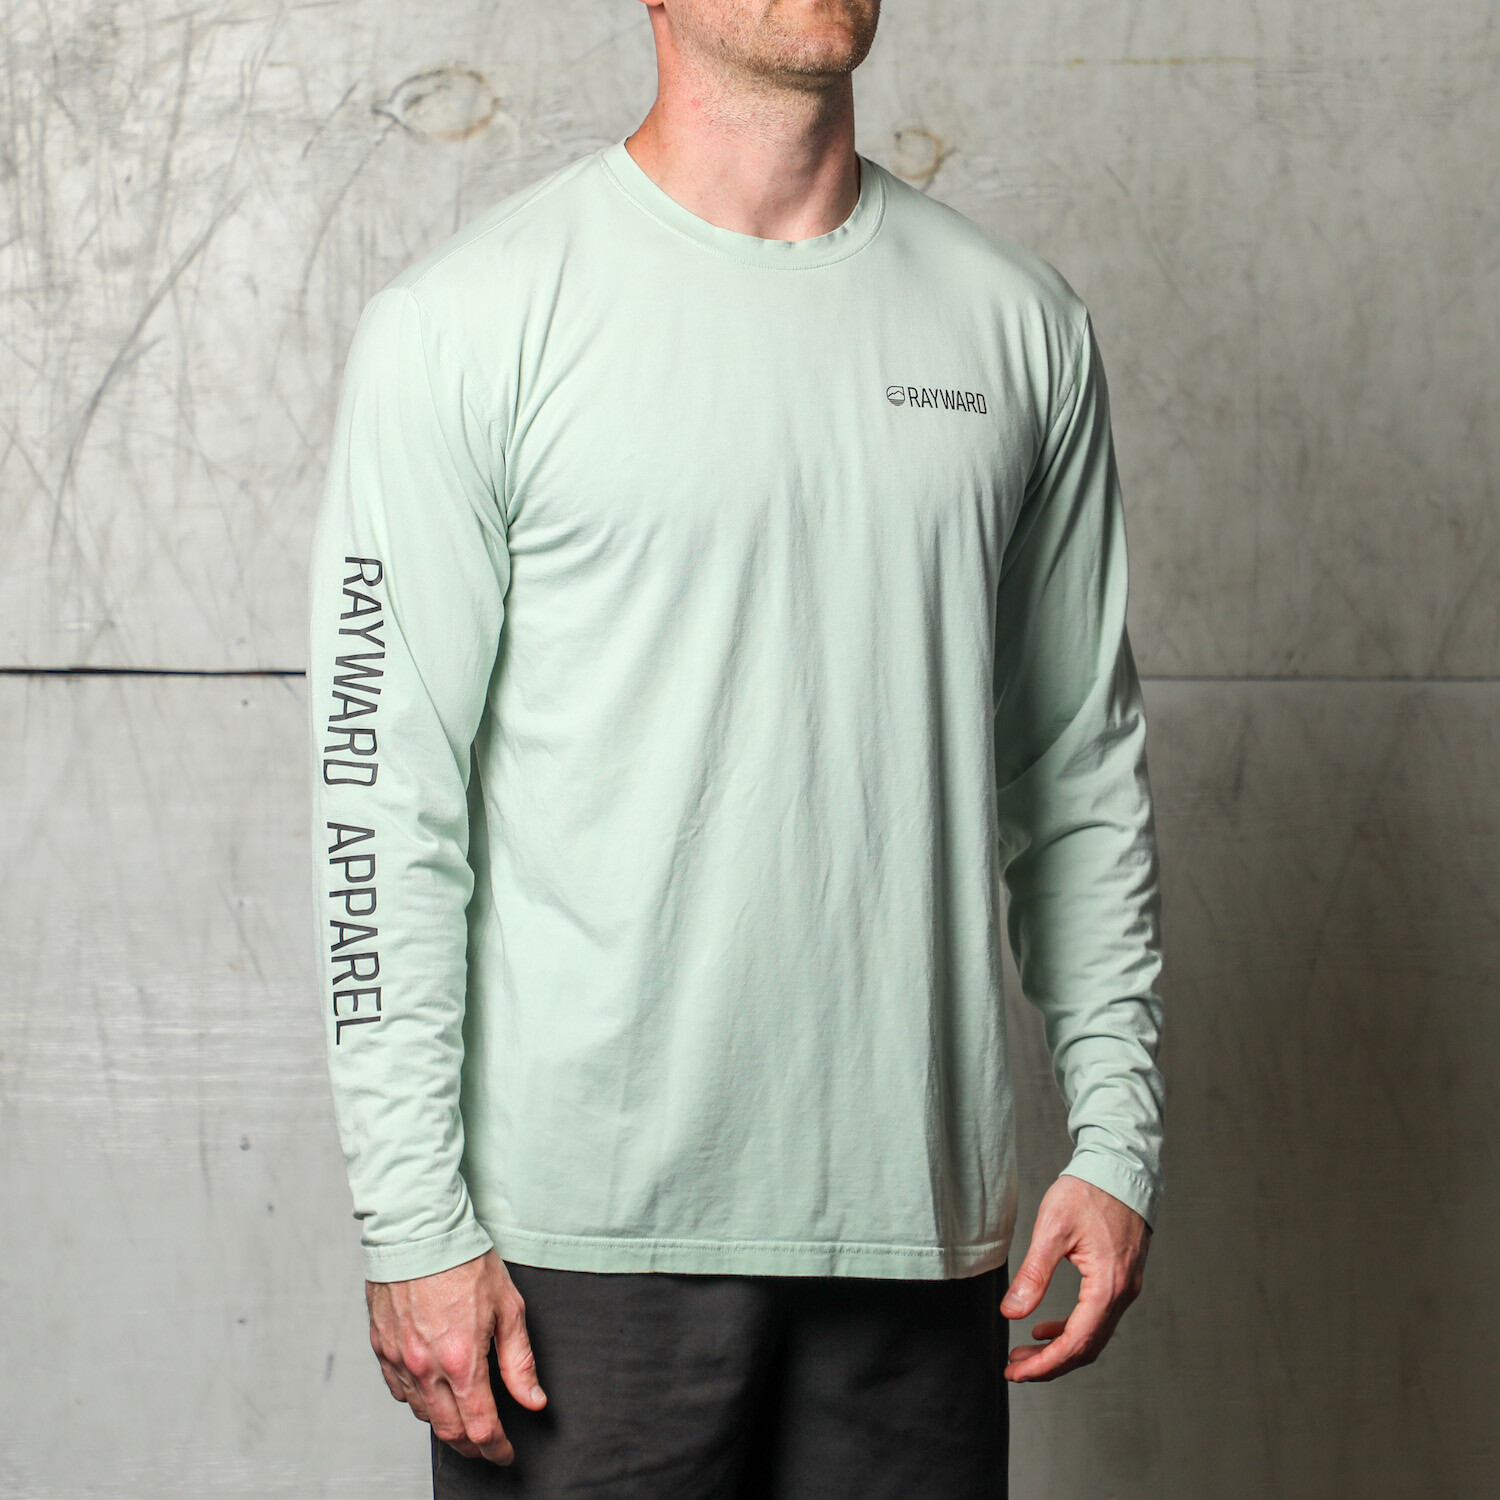 Crescent City Long Sleeve Bamboo Men's Sun Shirt // Upf 45 // Cool Mint (L)  - Rayward Apparel Shirts & Hats - Touch of Modern